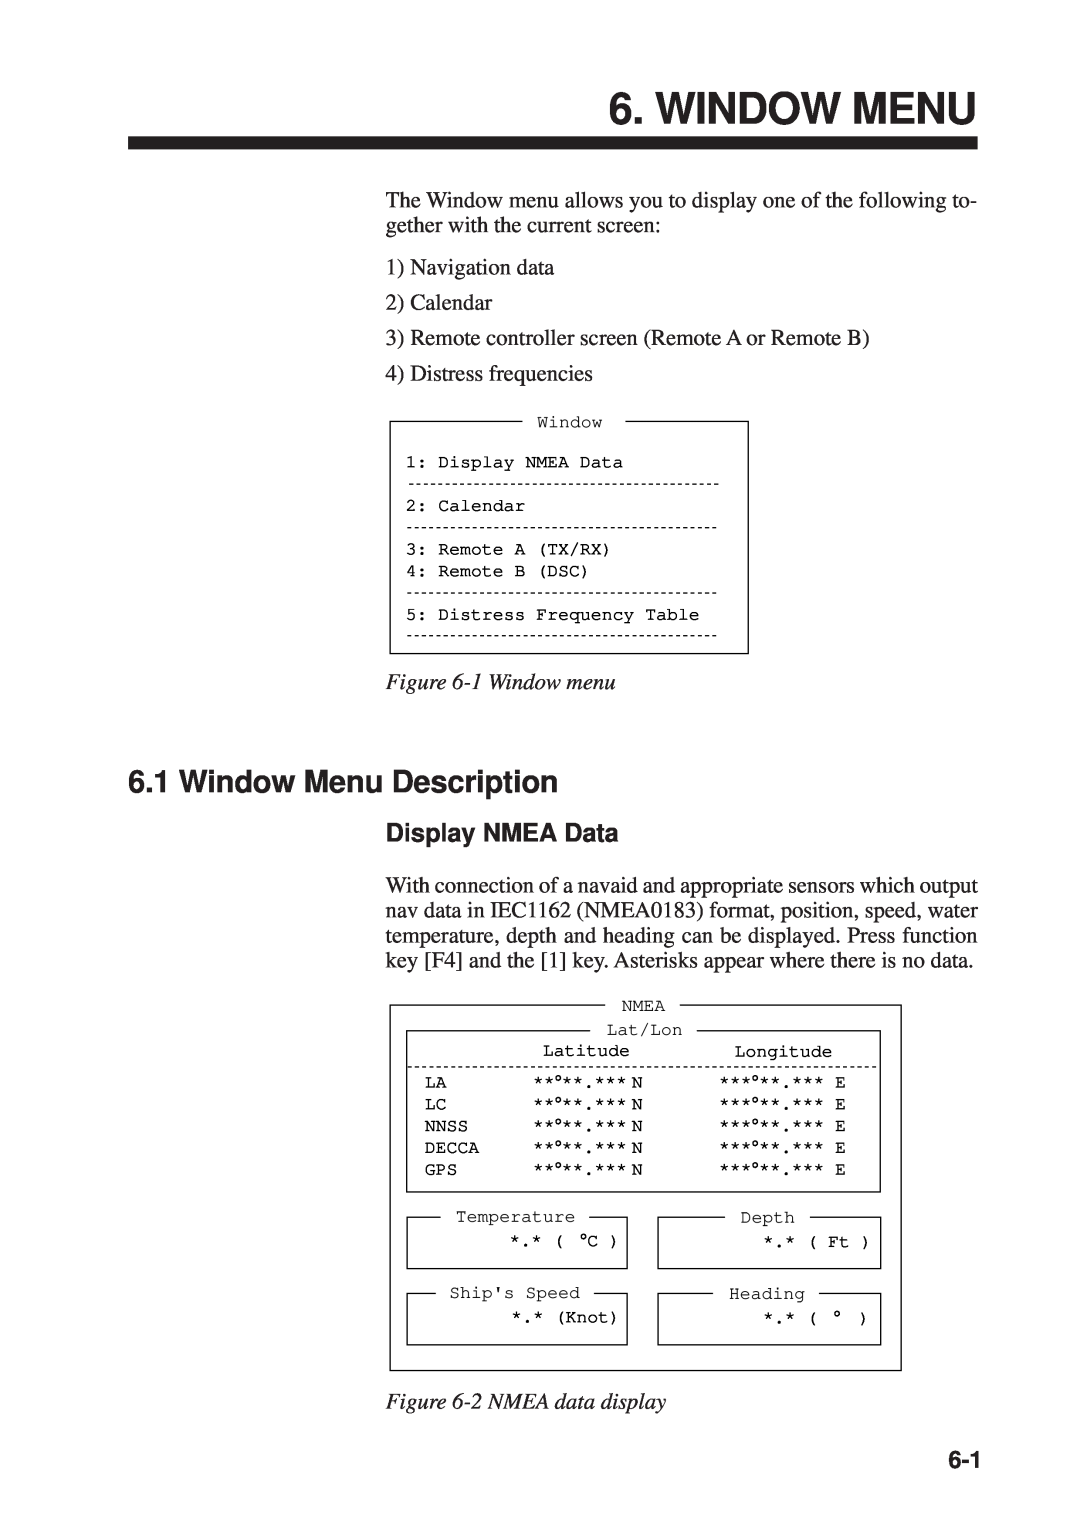 Furuno RC-1500-1T manual Window Menu Description, Display NMEA Data, 1 Window menu, 2 NMEA data display 